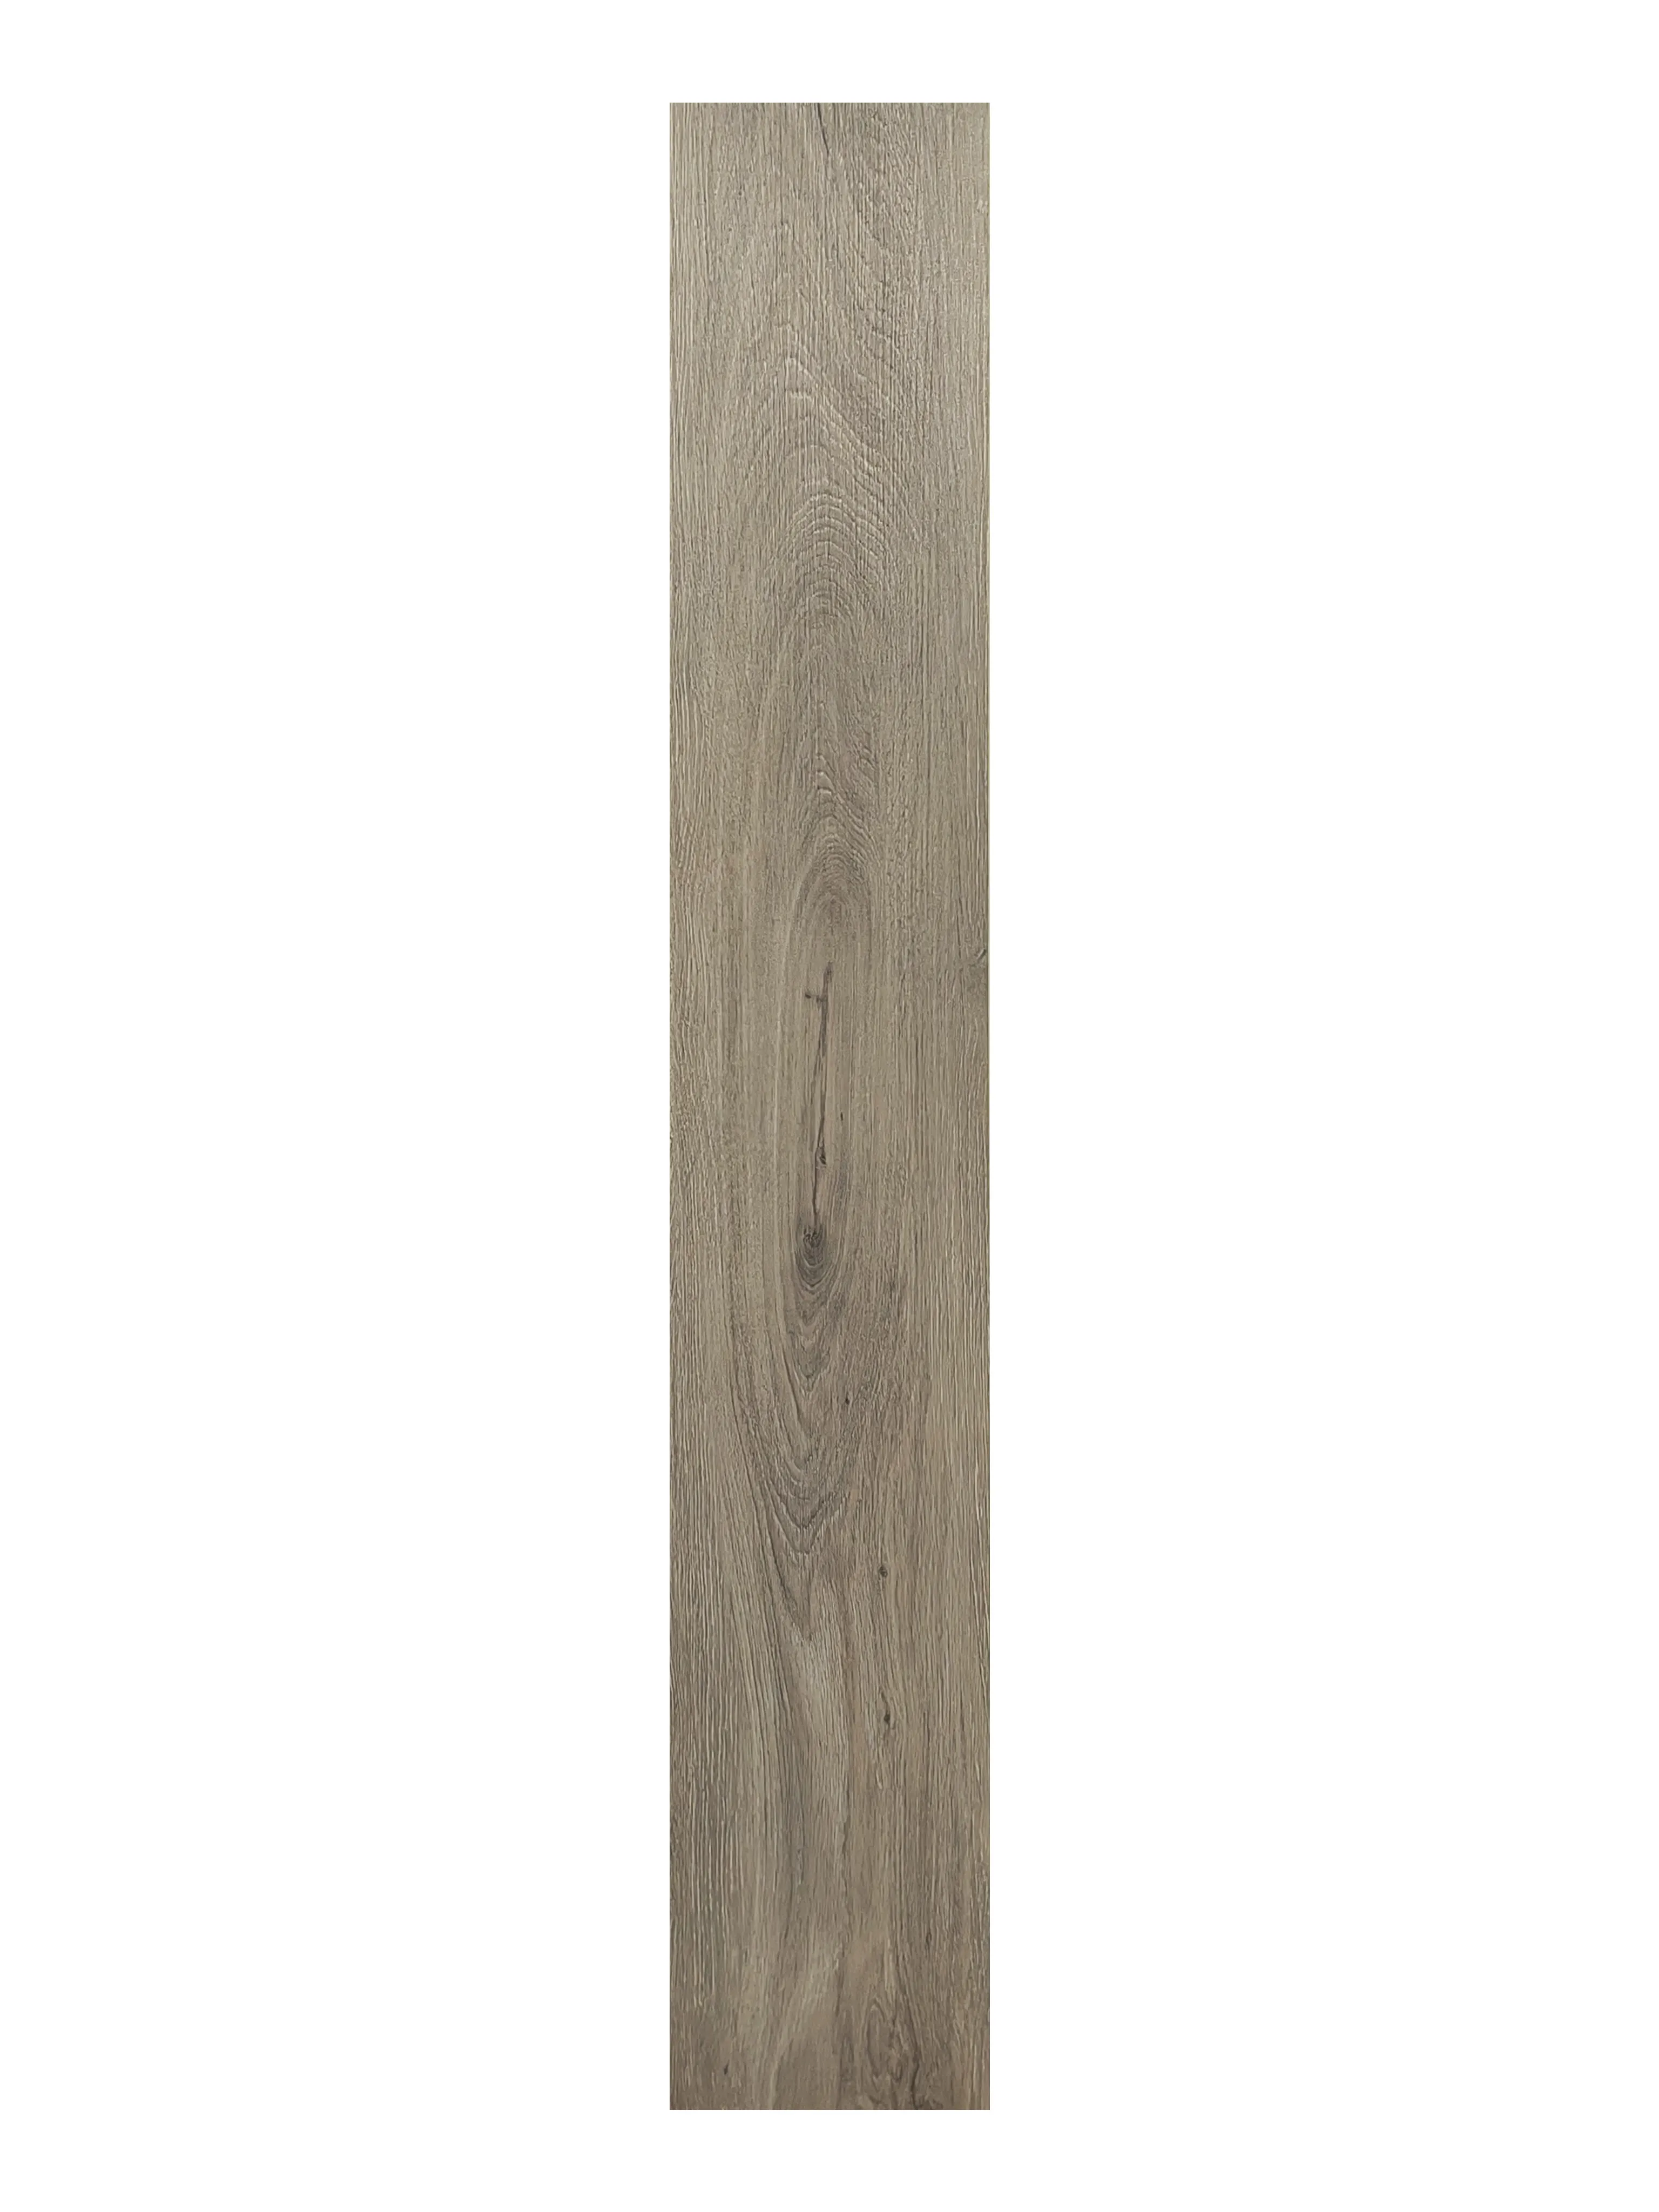 Lantai butiran kayu imitasi sambungan garasi tahan lama pemasangan mudah lantai pengunci untuk penggunaan Interior kamar tidur